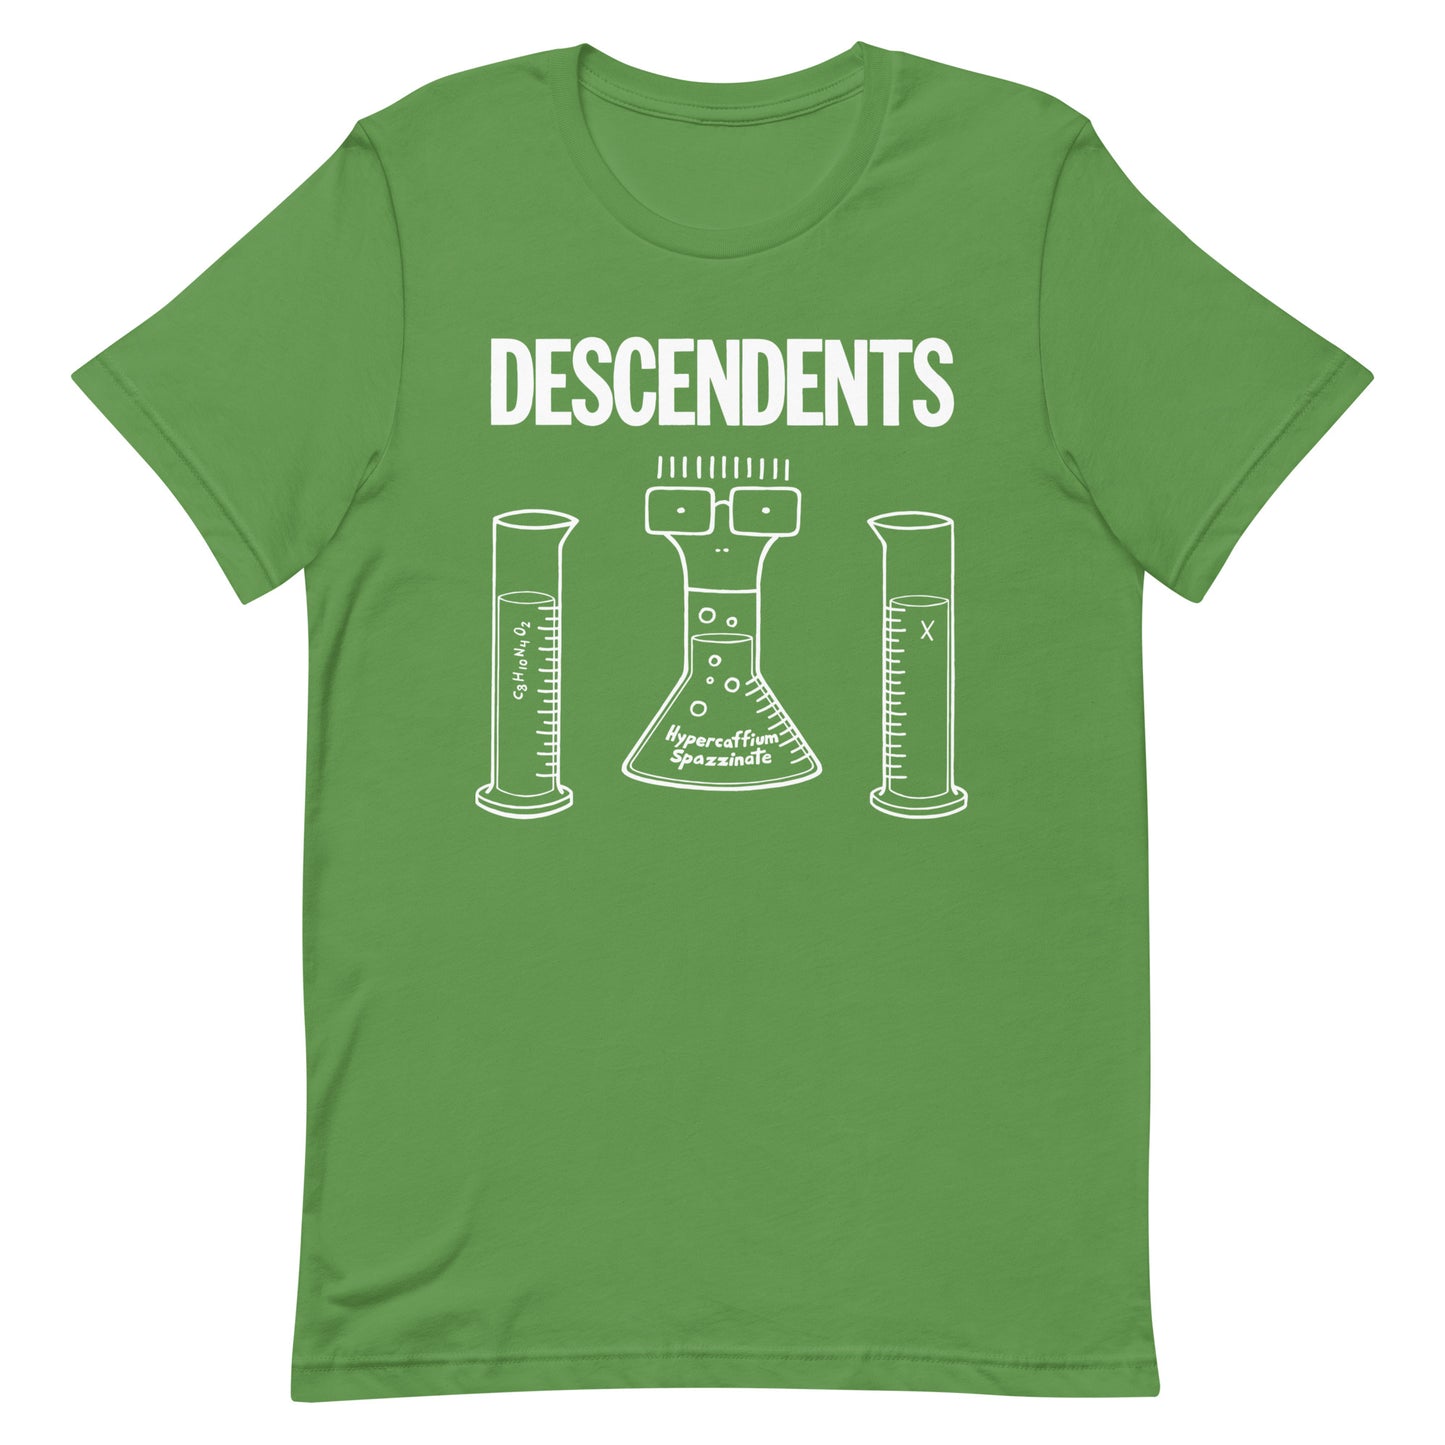 Descendents - Hypercaffium Spazzinate T-Shirt